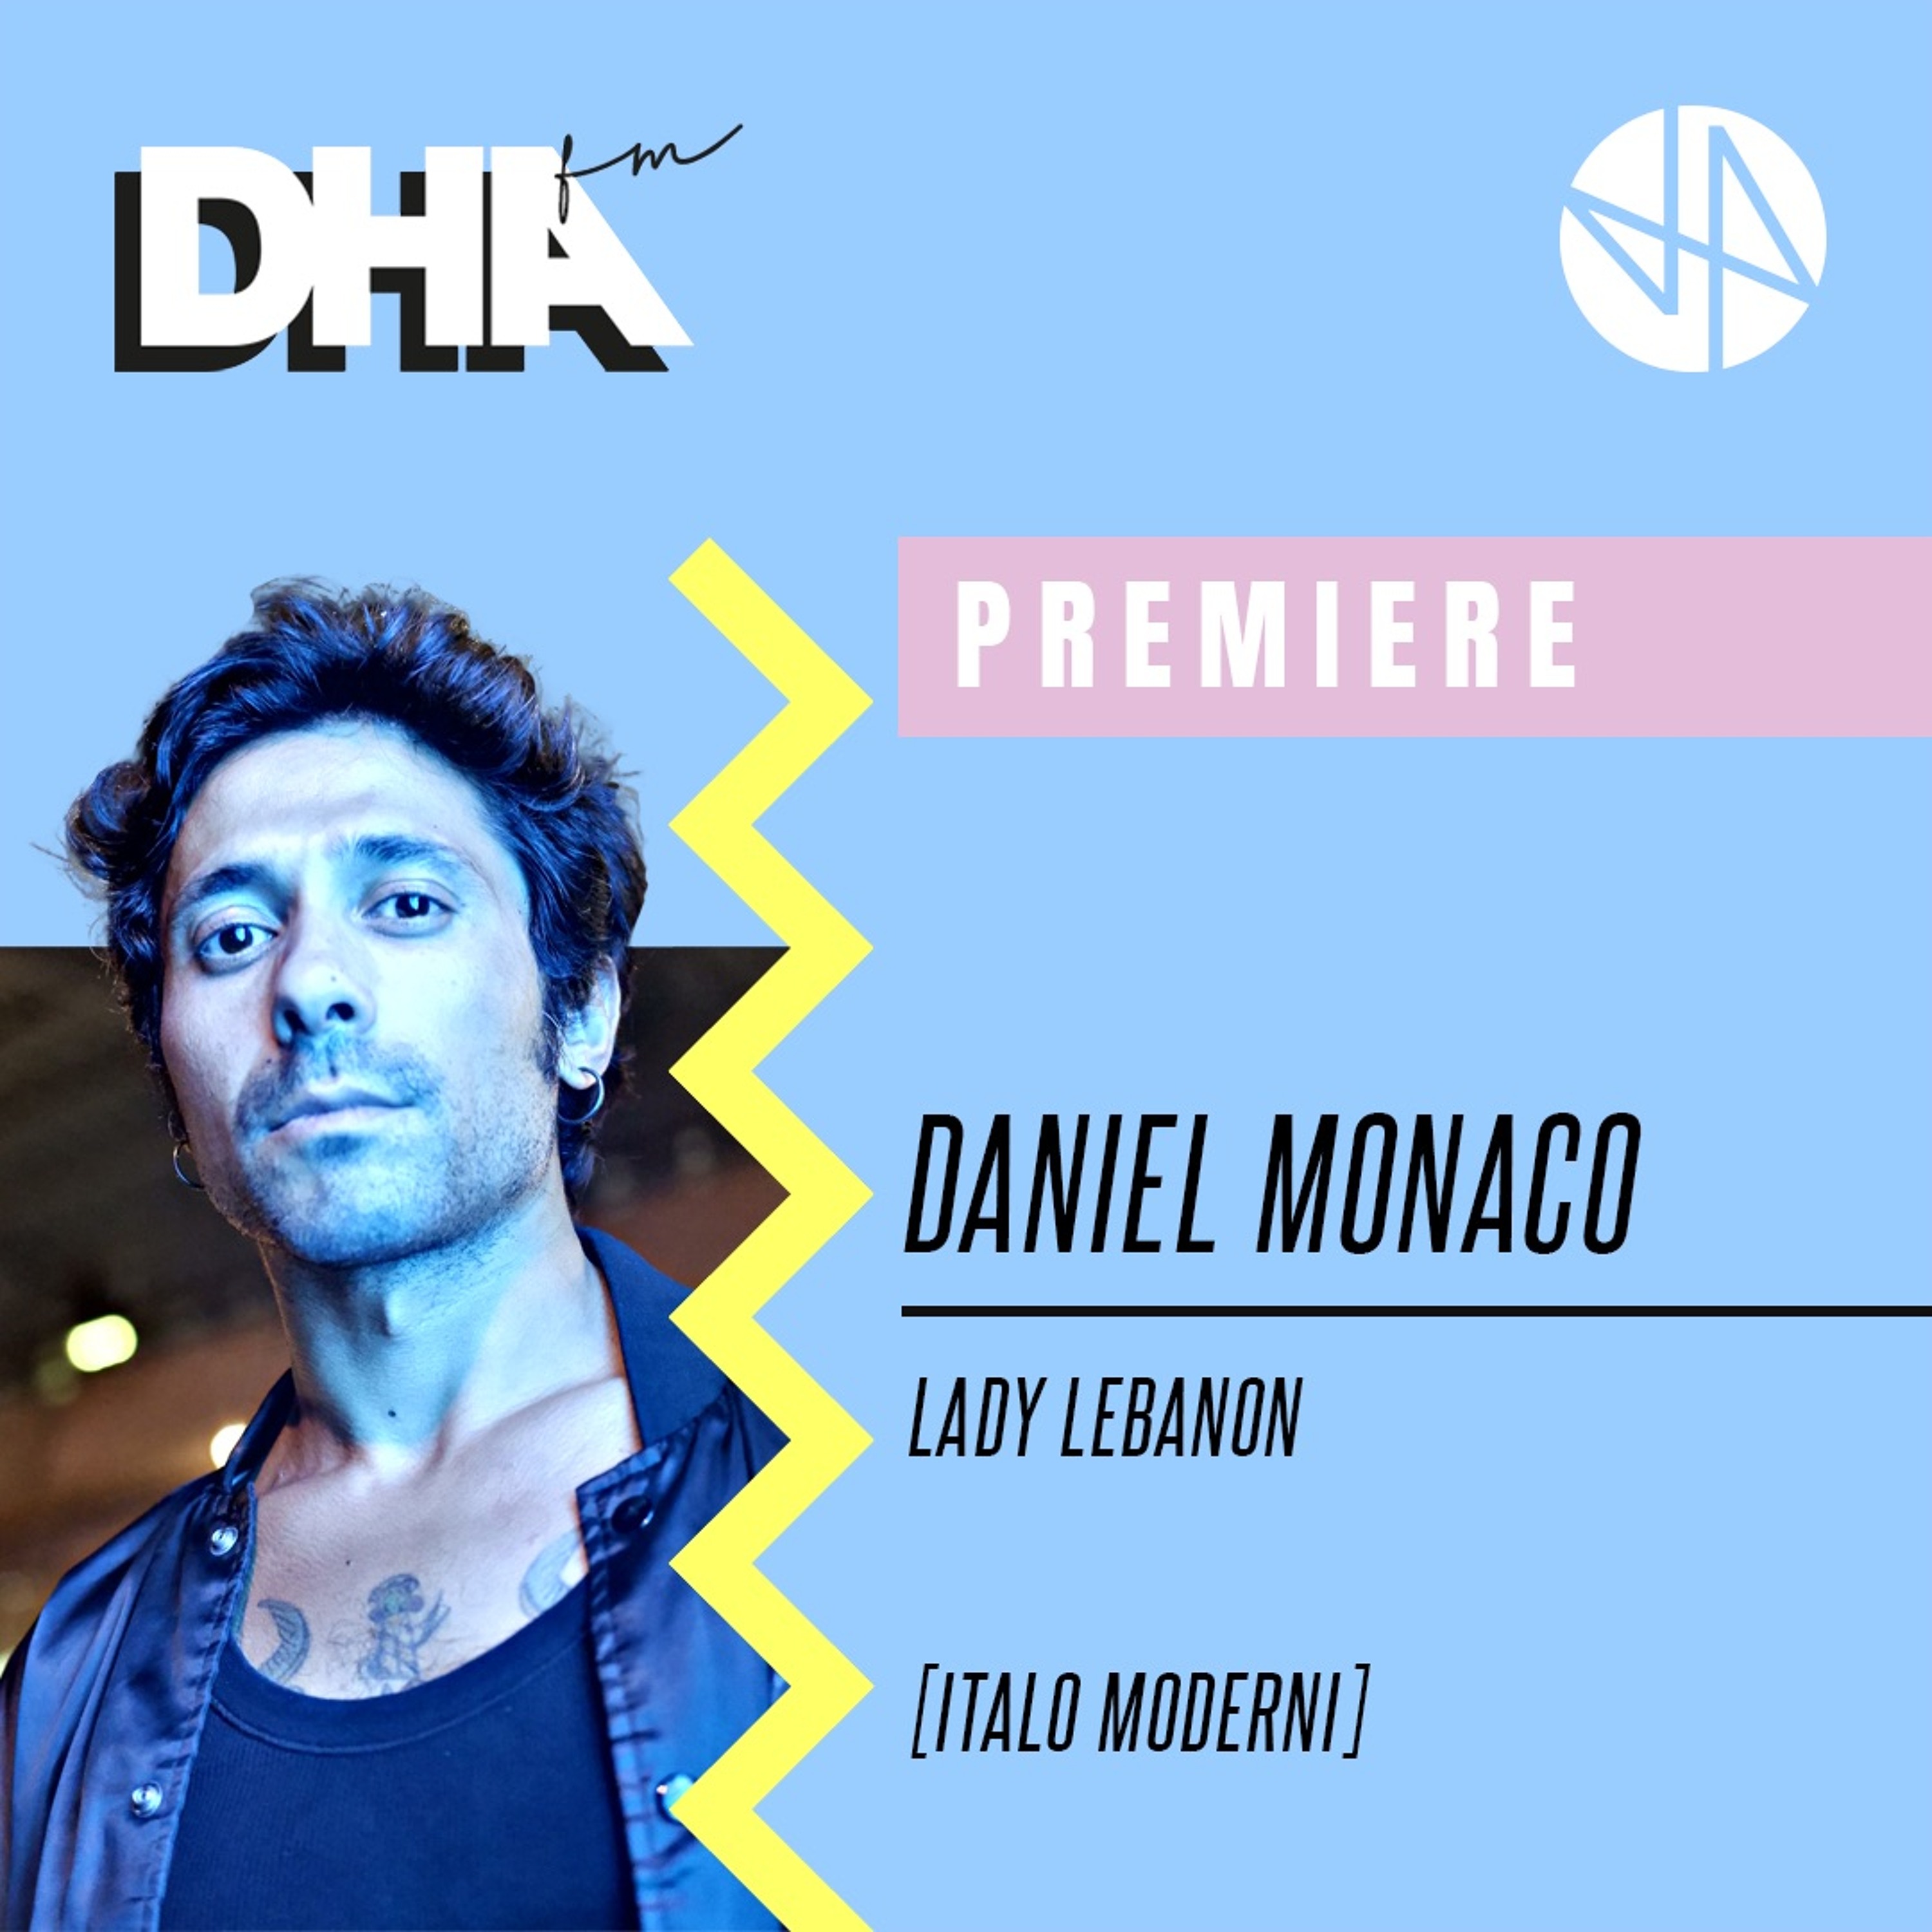 Premiere: Daniel Monaco - Lady Lebanon [Italo Moderni]